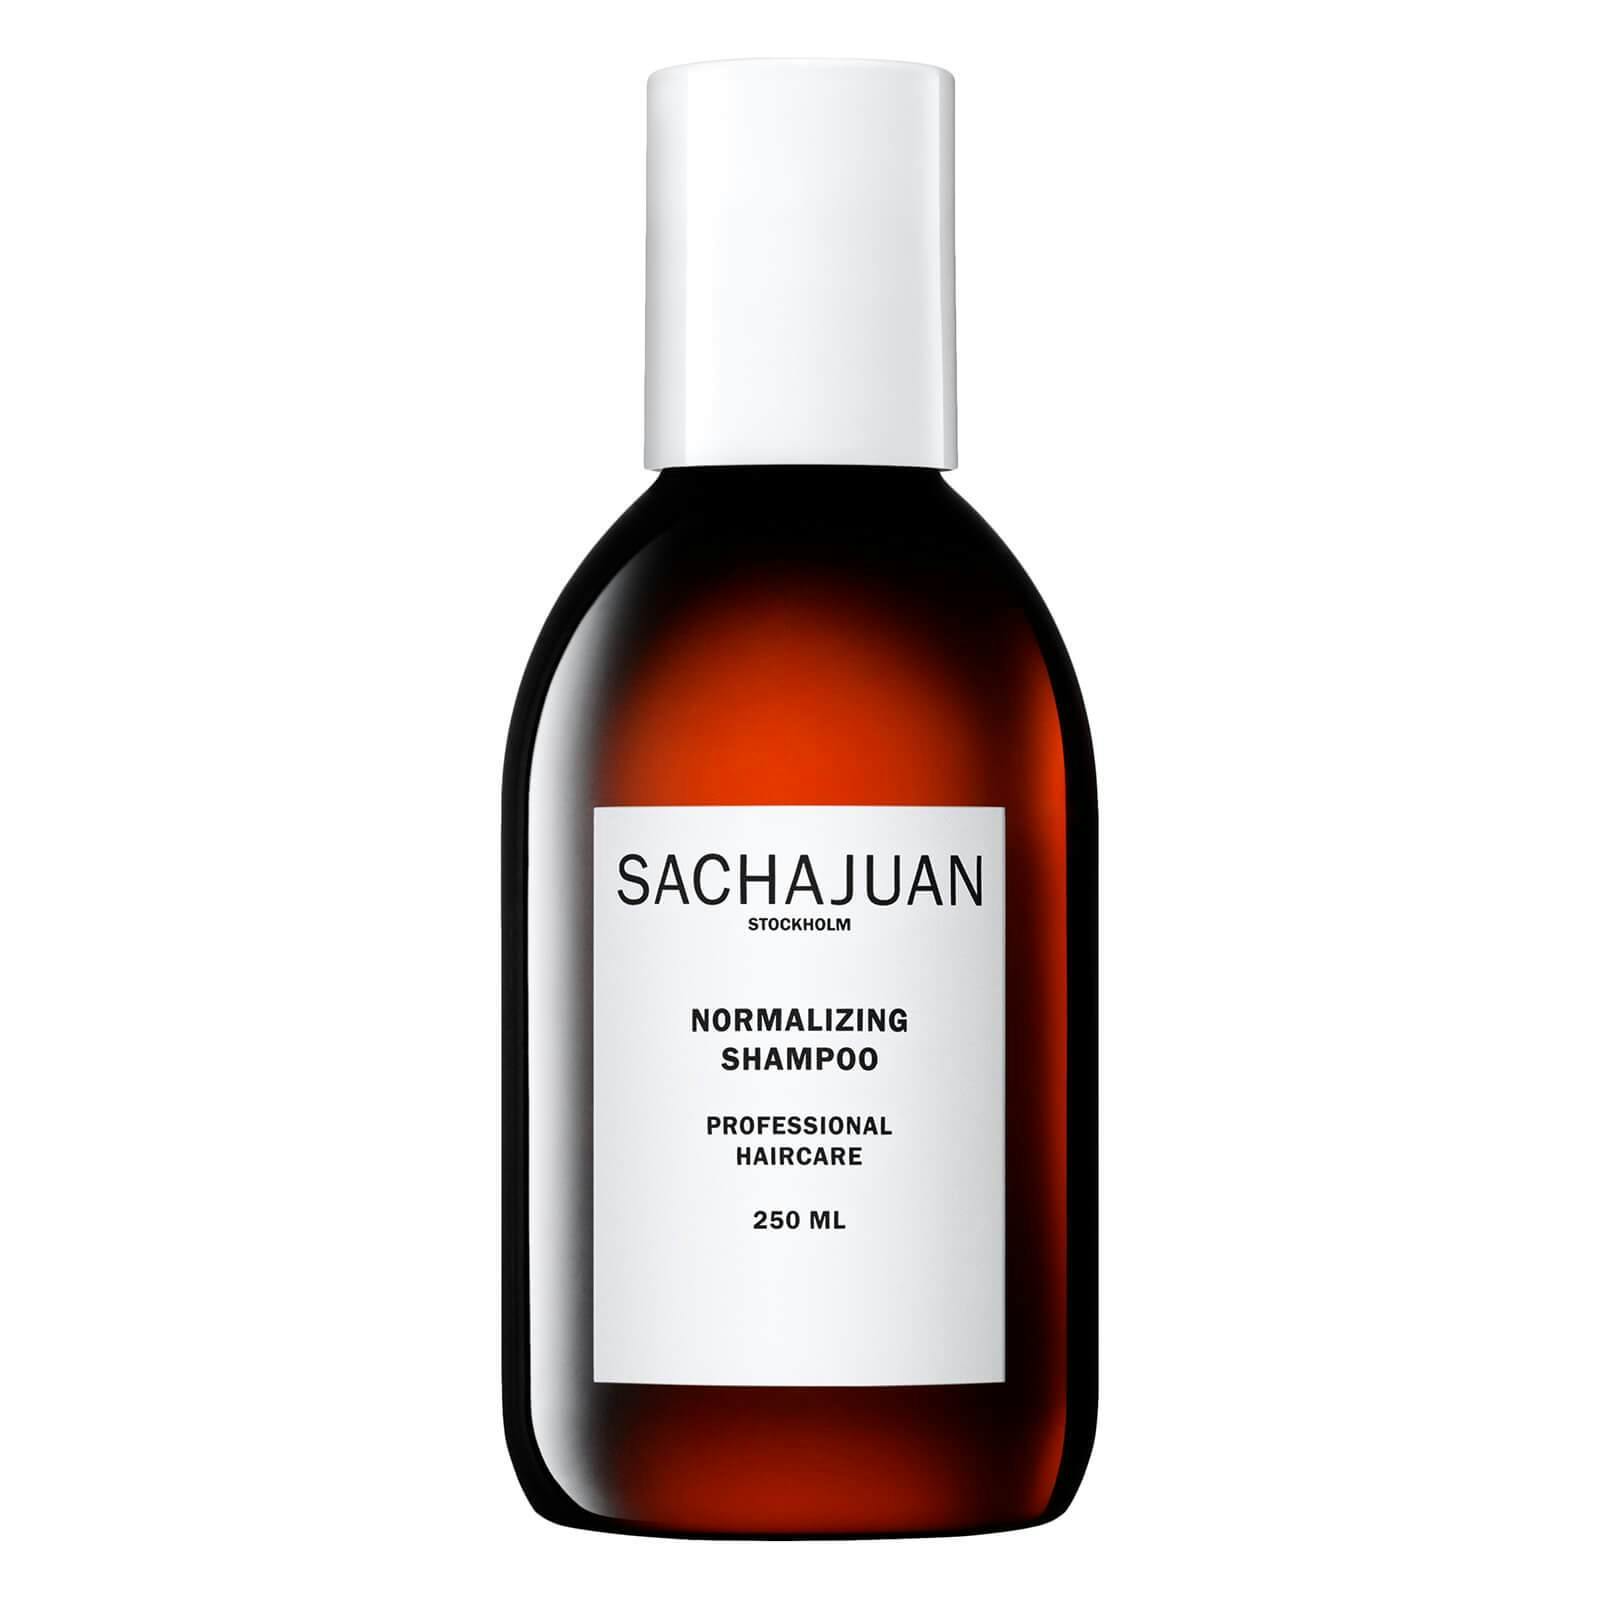 Sachajuan Normalizing Shampoo 250ml